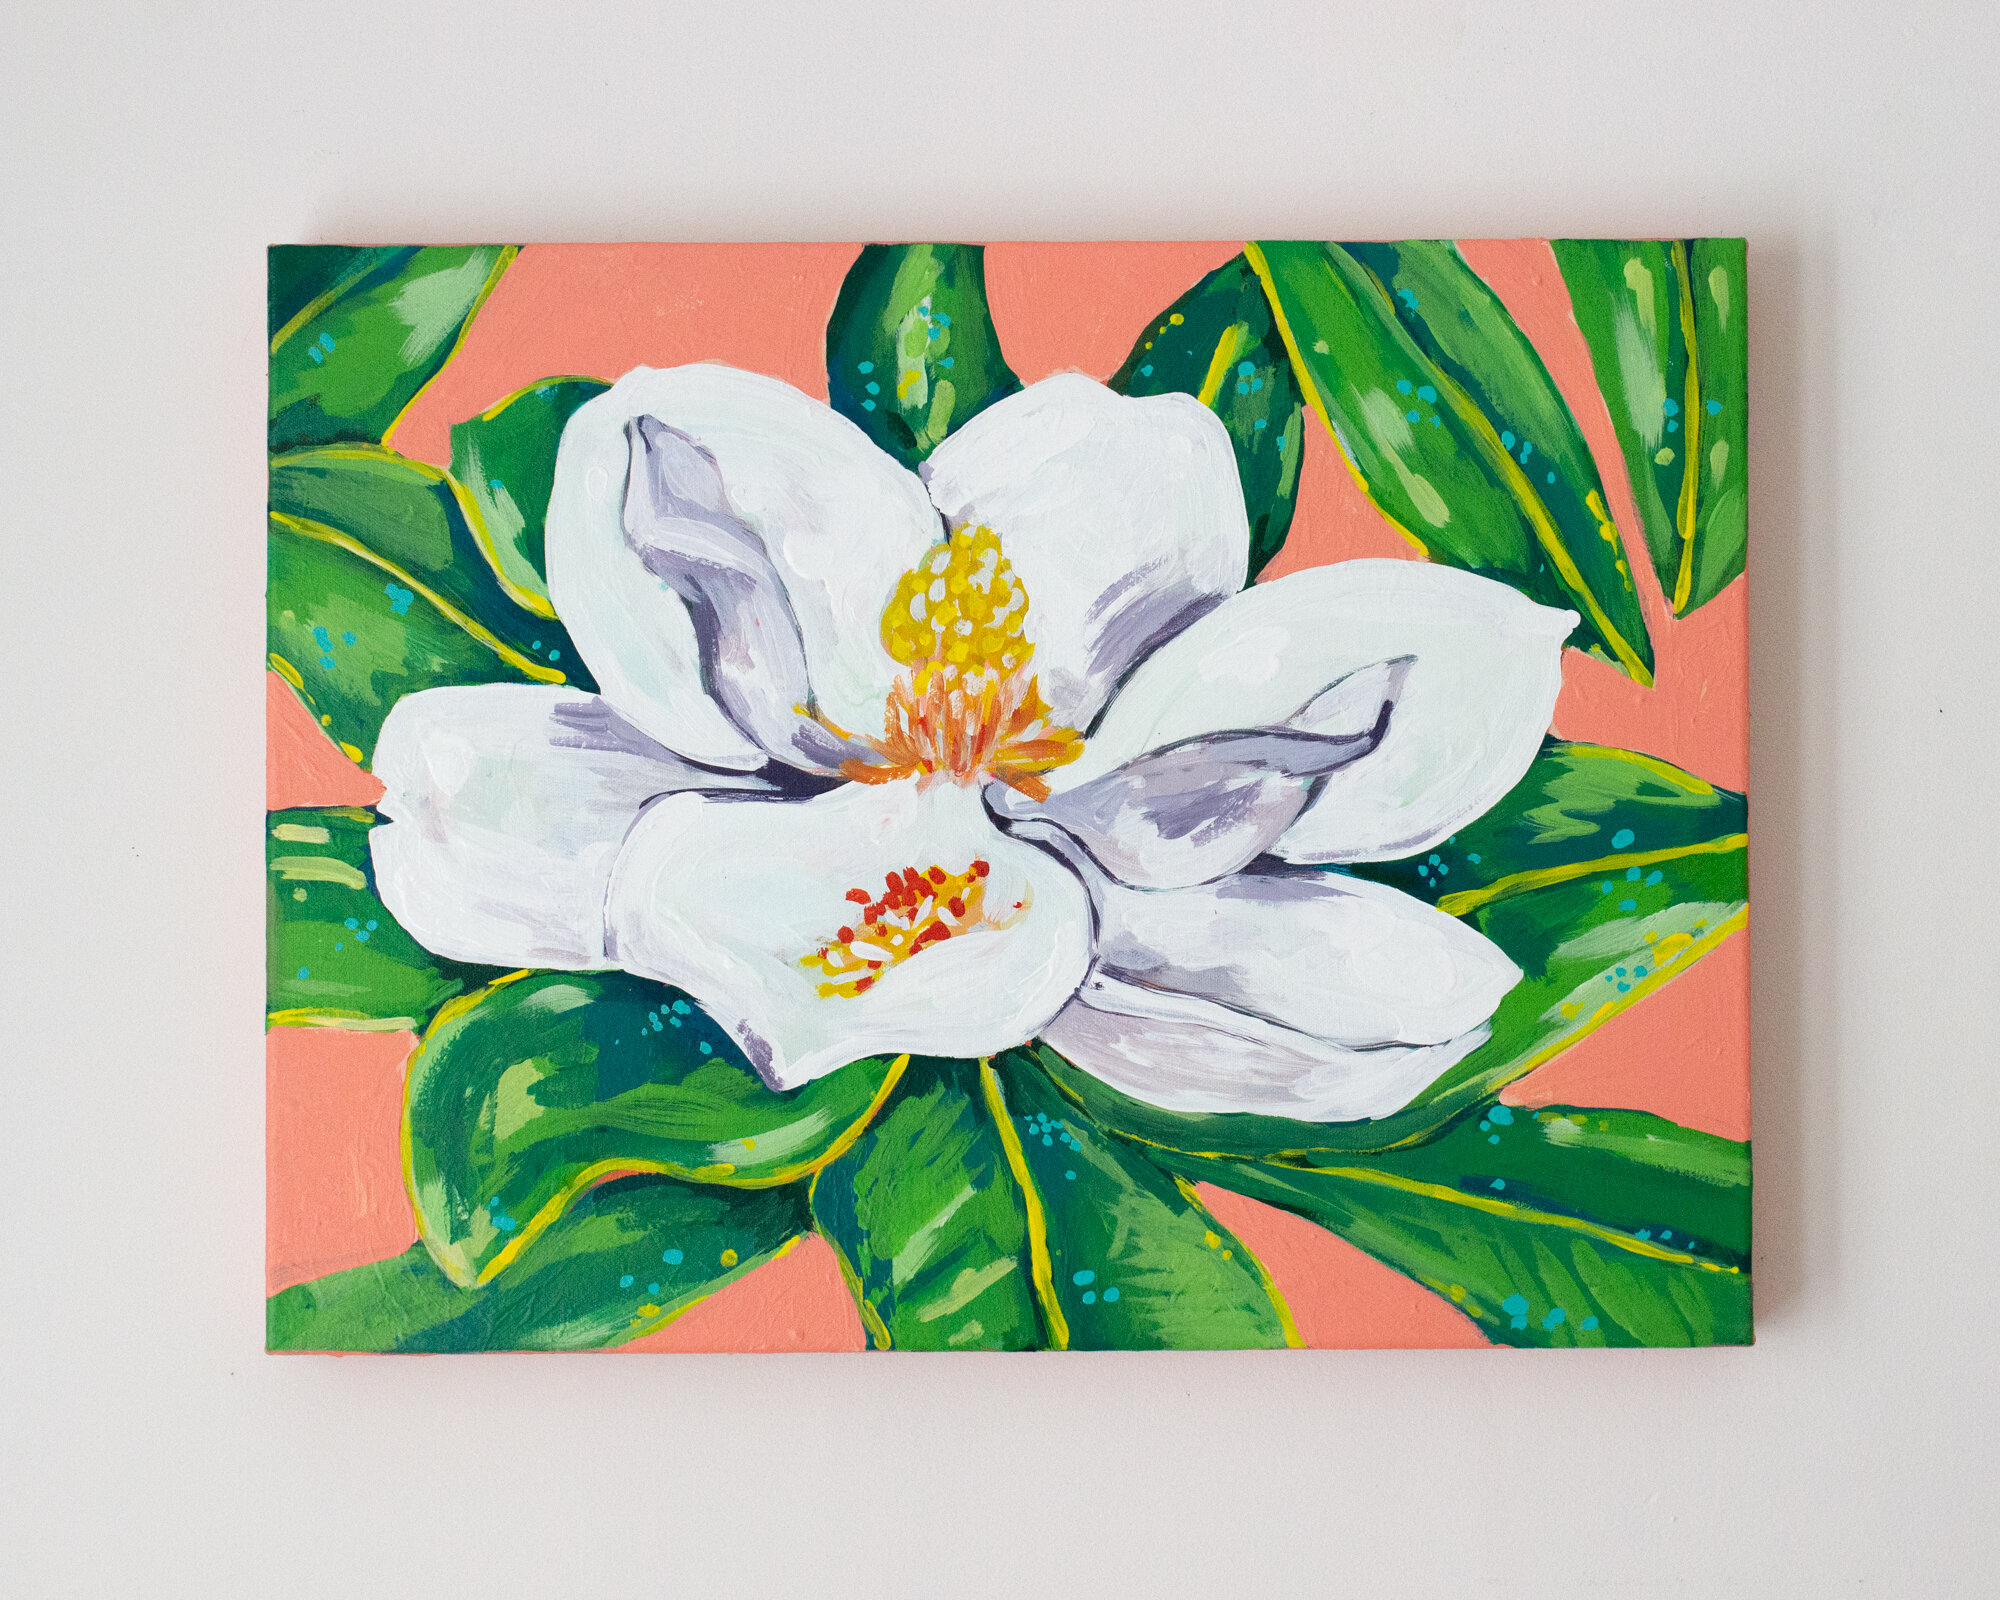 nerney_anniversary_Magnolia grandiflora_18x24_acrylic on canvas_$725.jpg